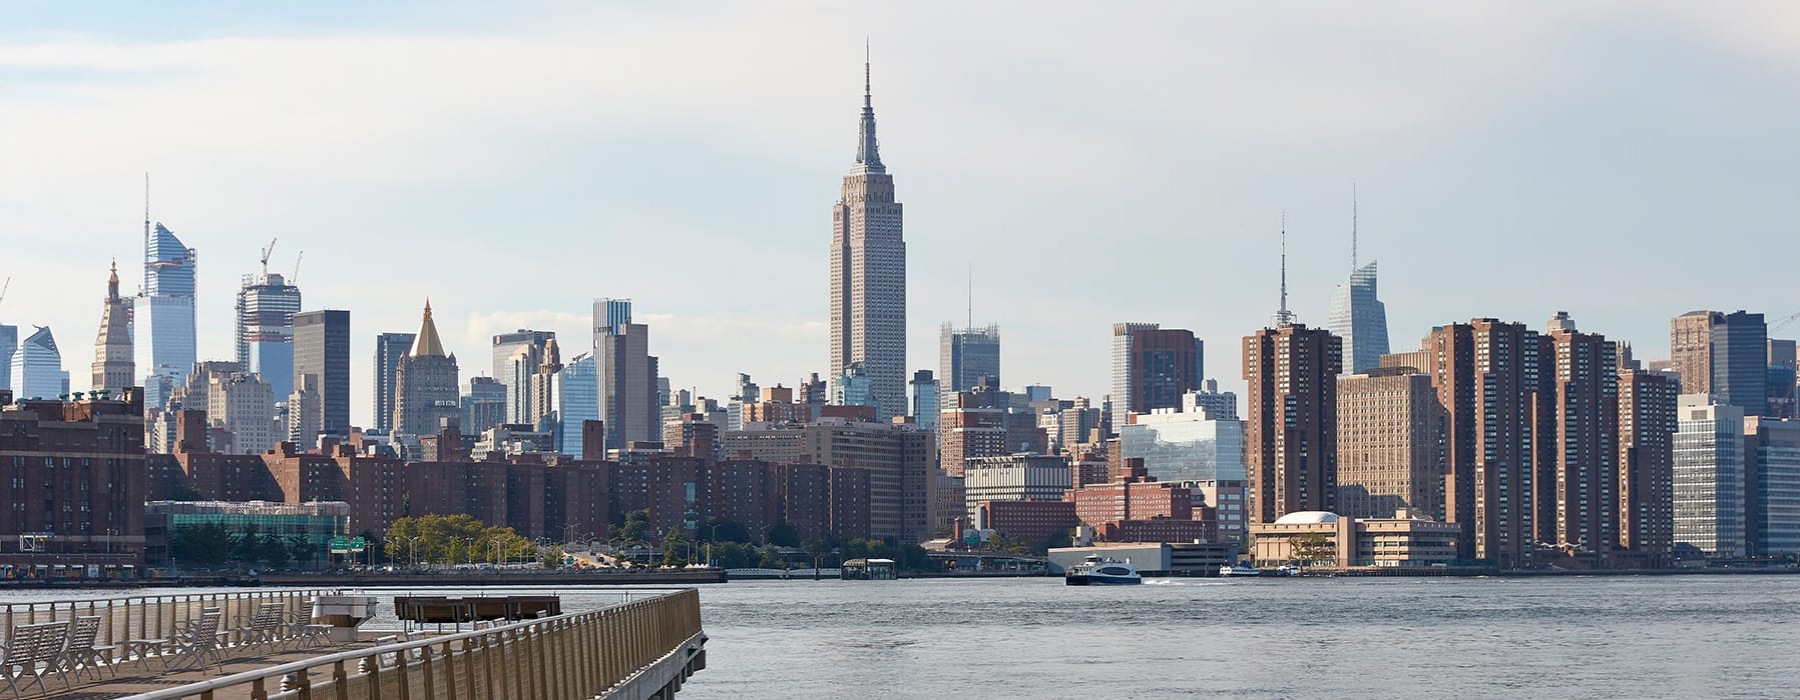 New York City skyline across the river